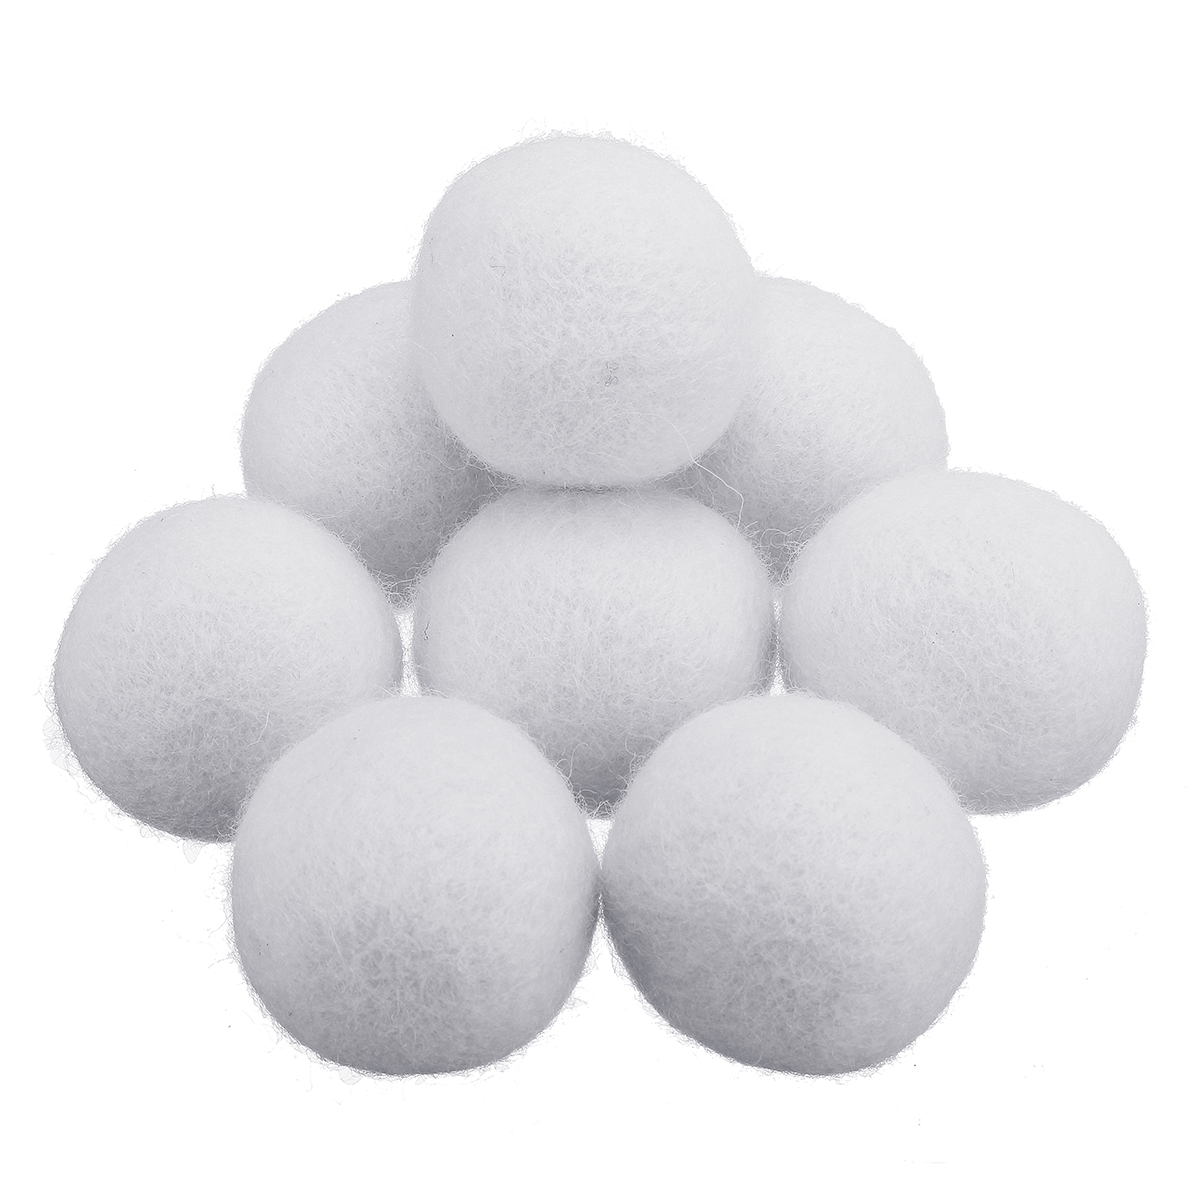 

8Pcs/Set 2/3/4/5/7cm Natural Fabric Wool Dryer Ball Laundry Softener Wrinkle-free Dryer Ball